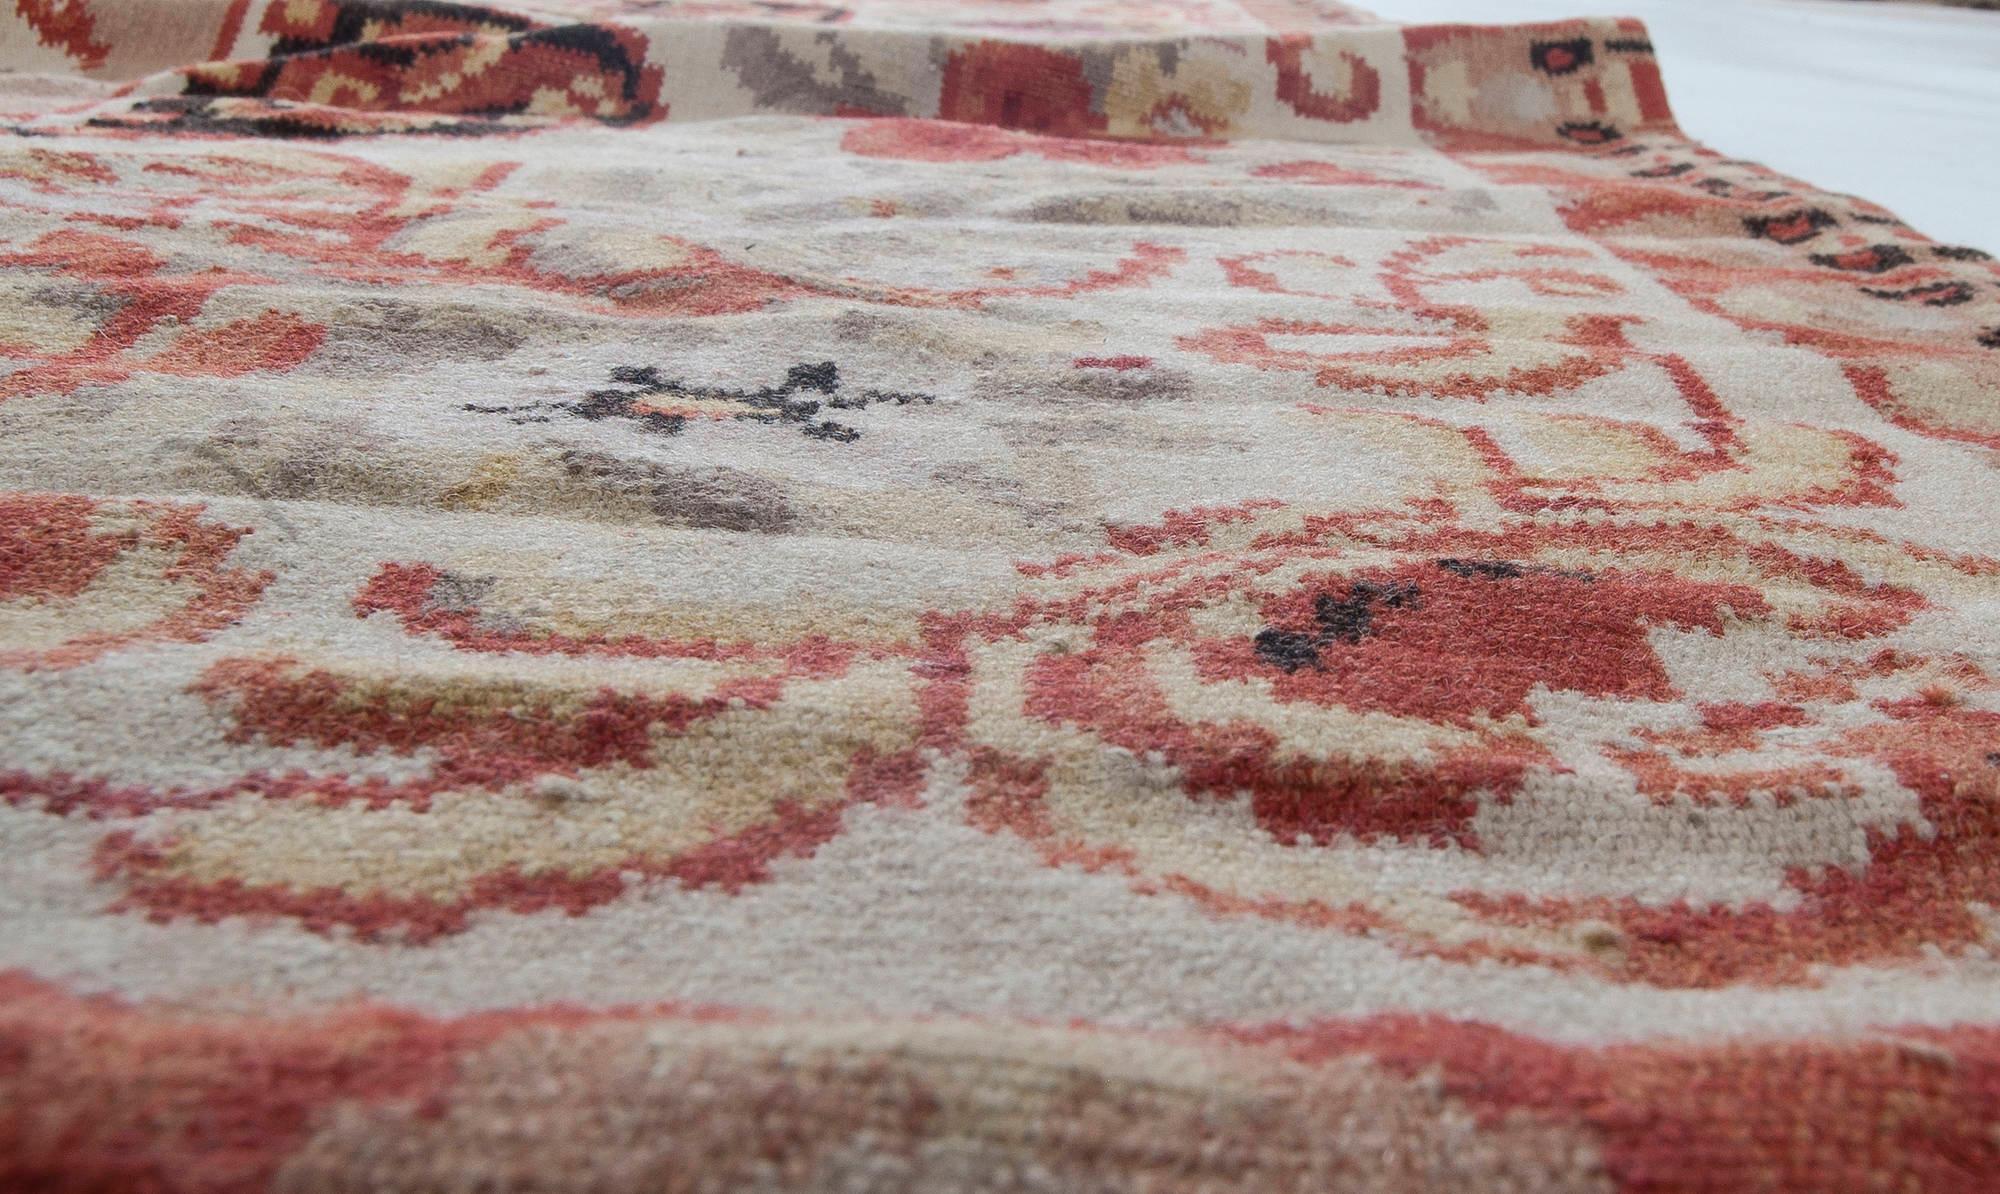 Contemporary European inspired Bassarabian floral rug by Doris Leslie Blau.
Size: 7'4